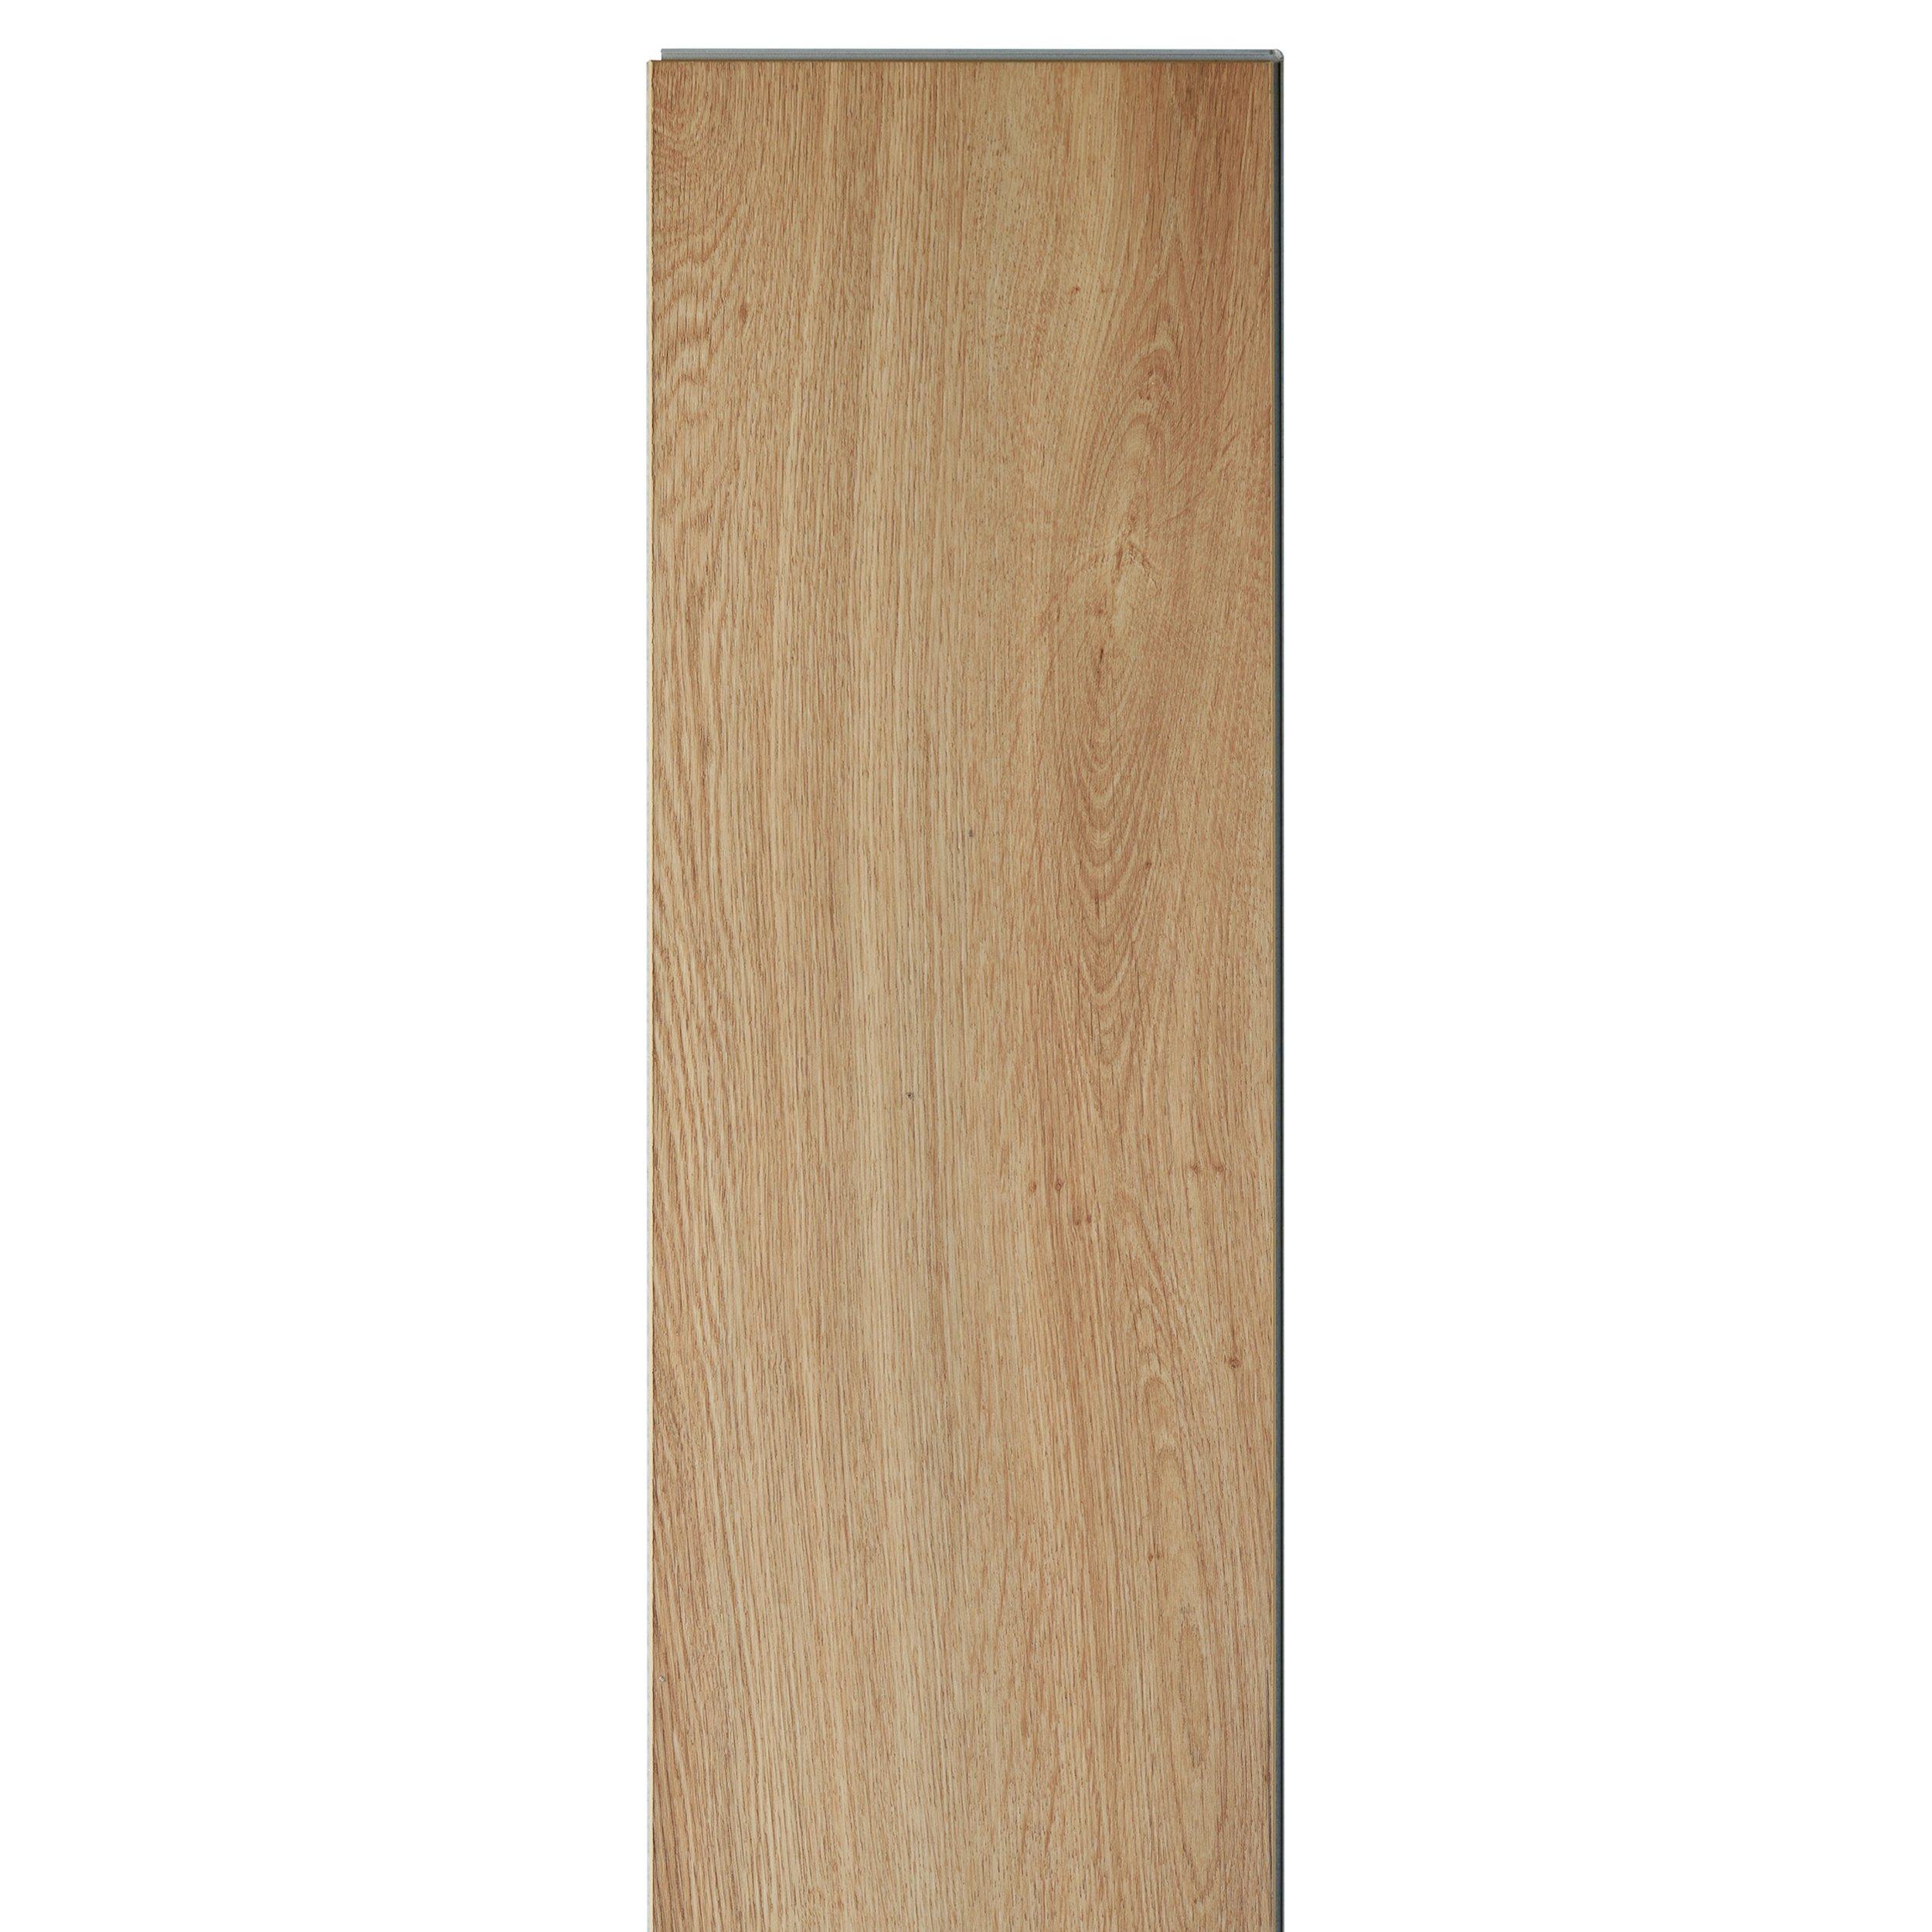 Odin Peak Rigid Core Luxury Vinyl Plank - Cork Back